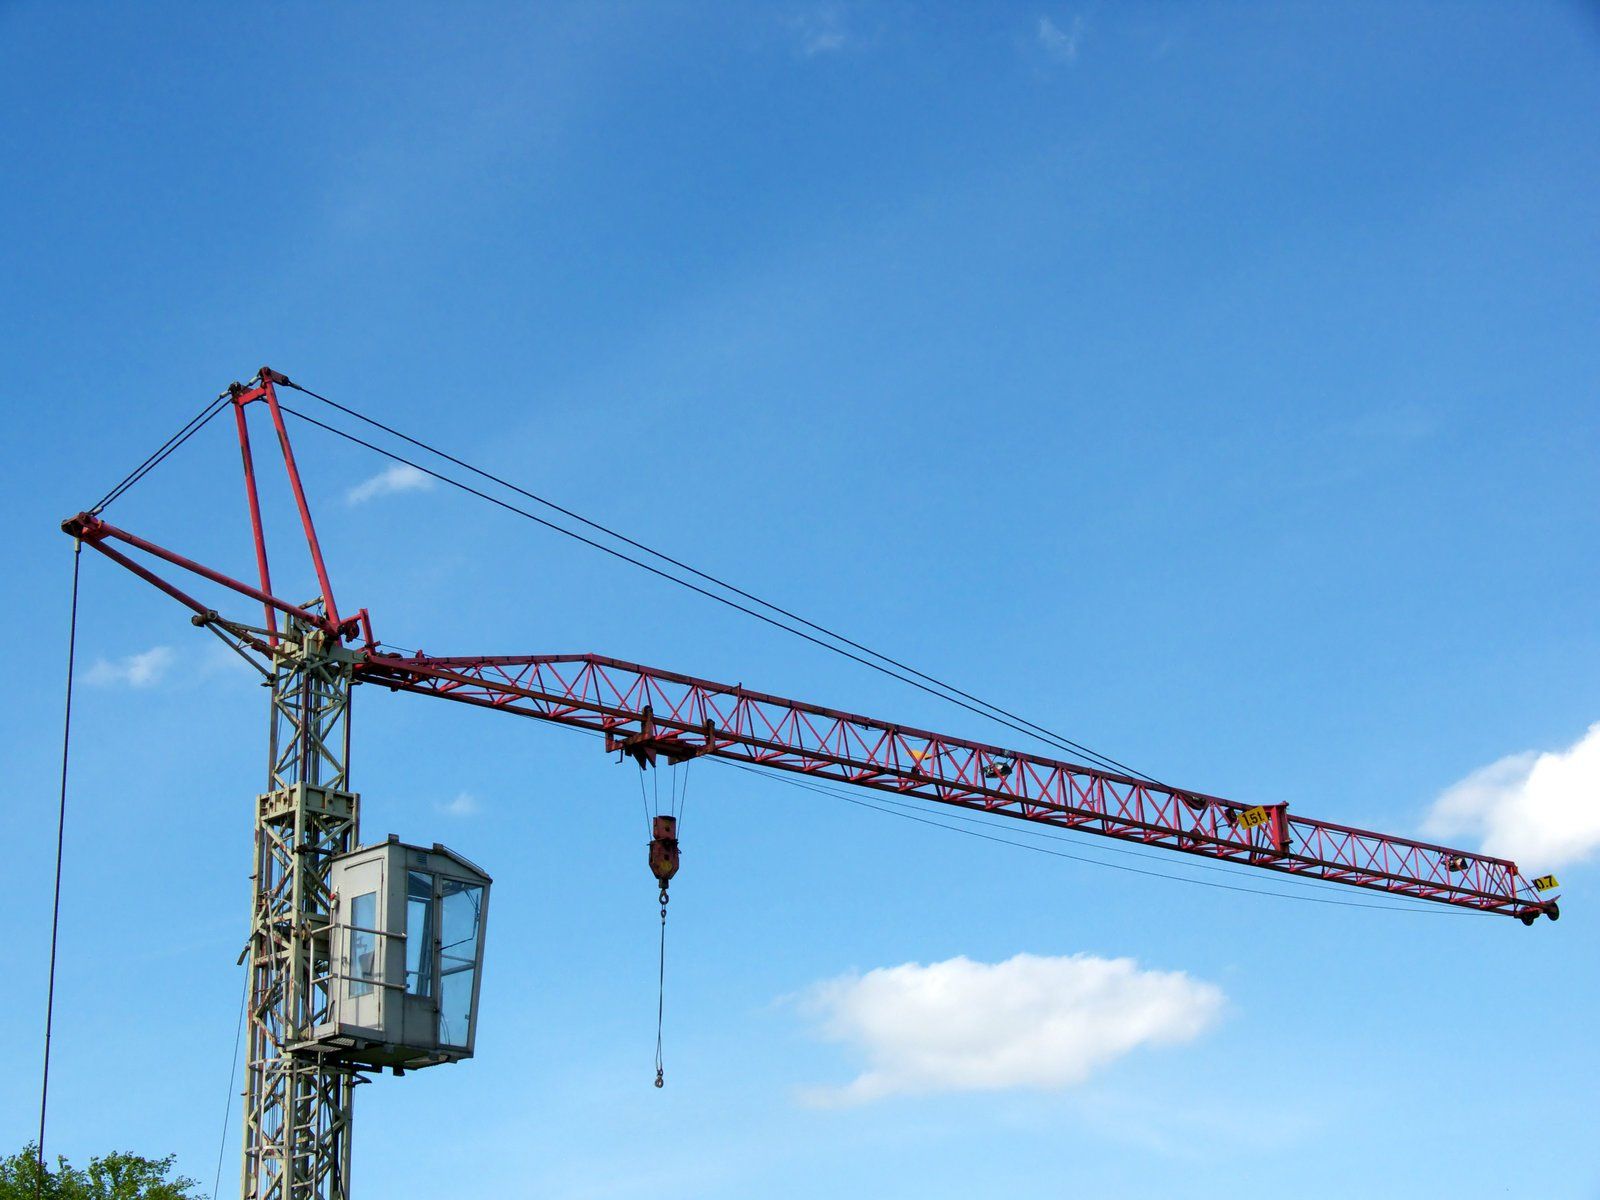 a mobile crane on a building